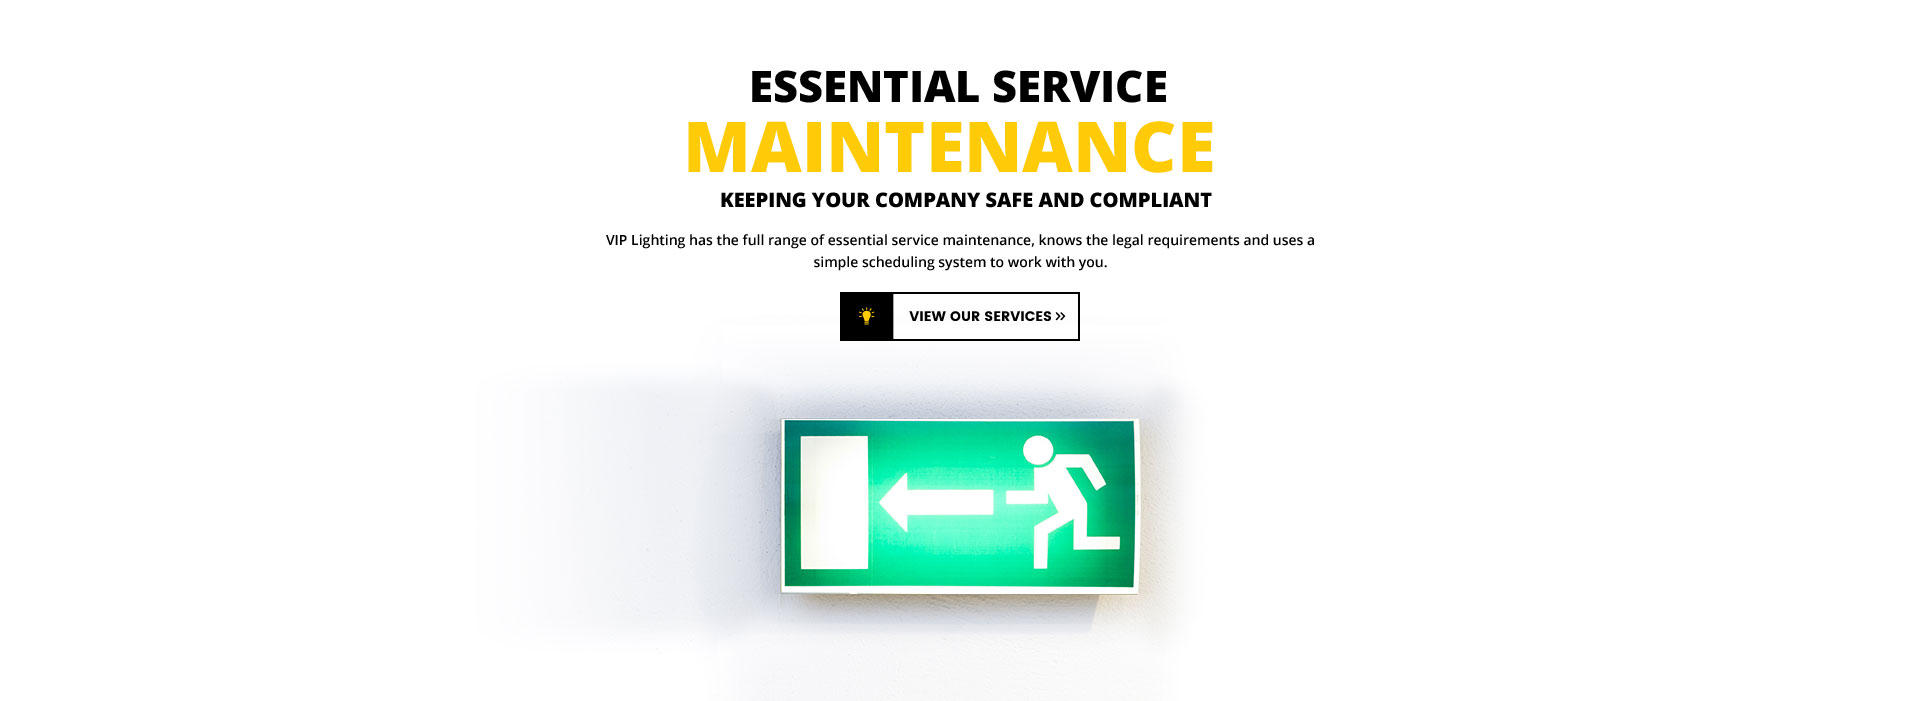 Essential Service Maintenance